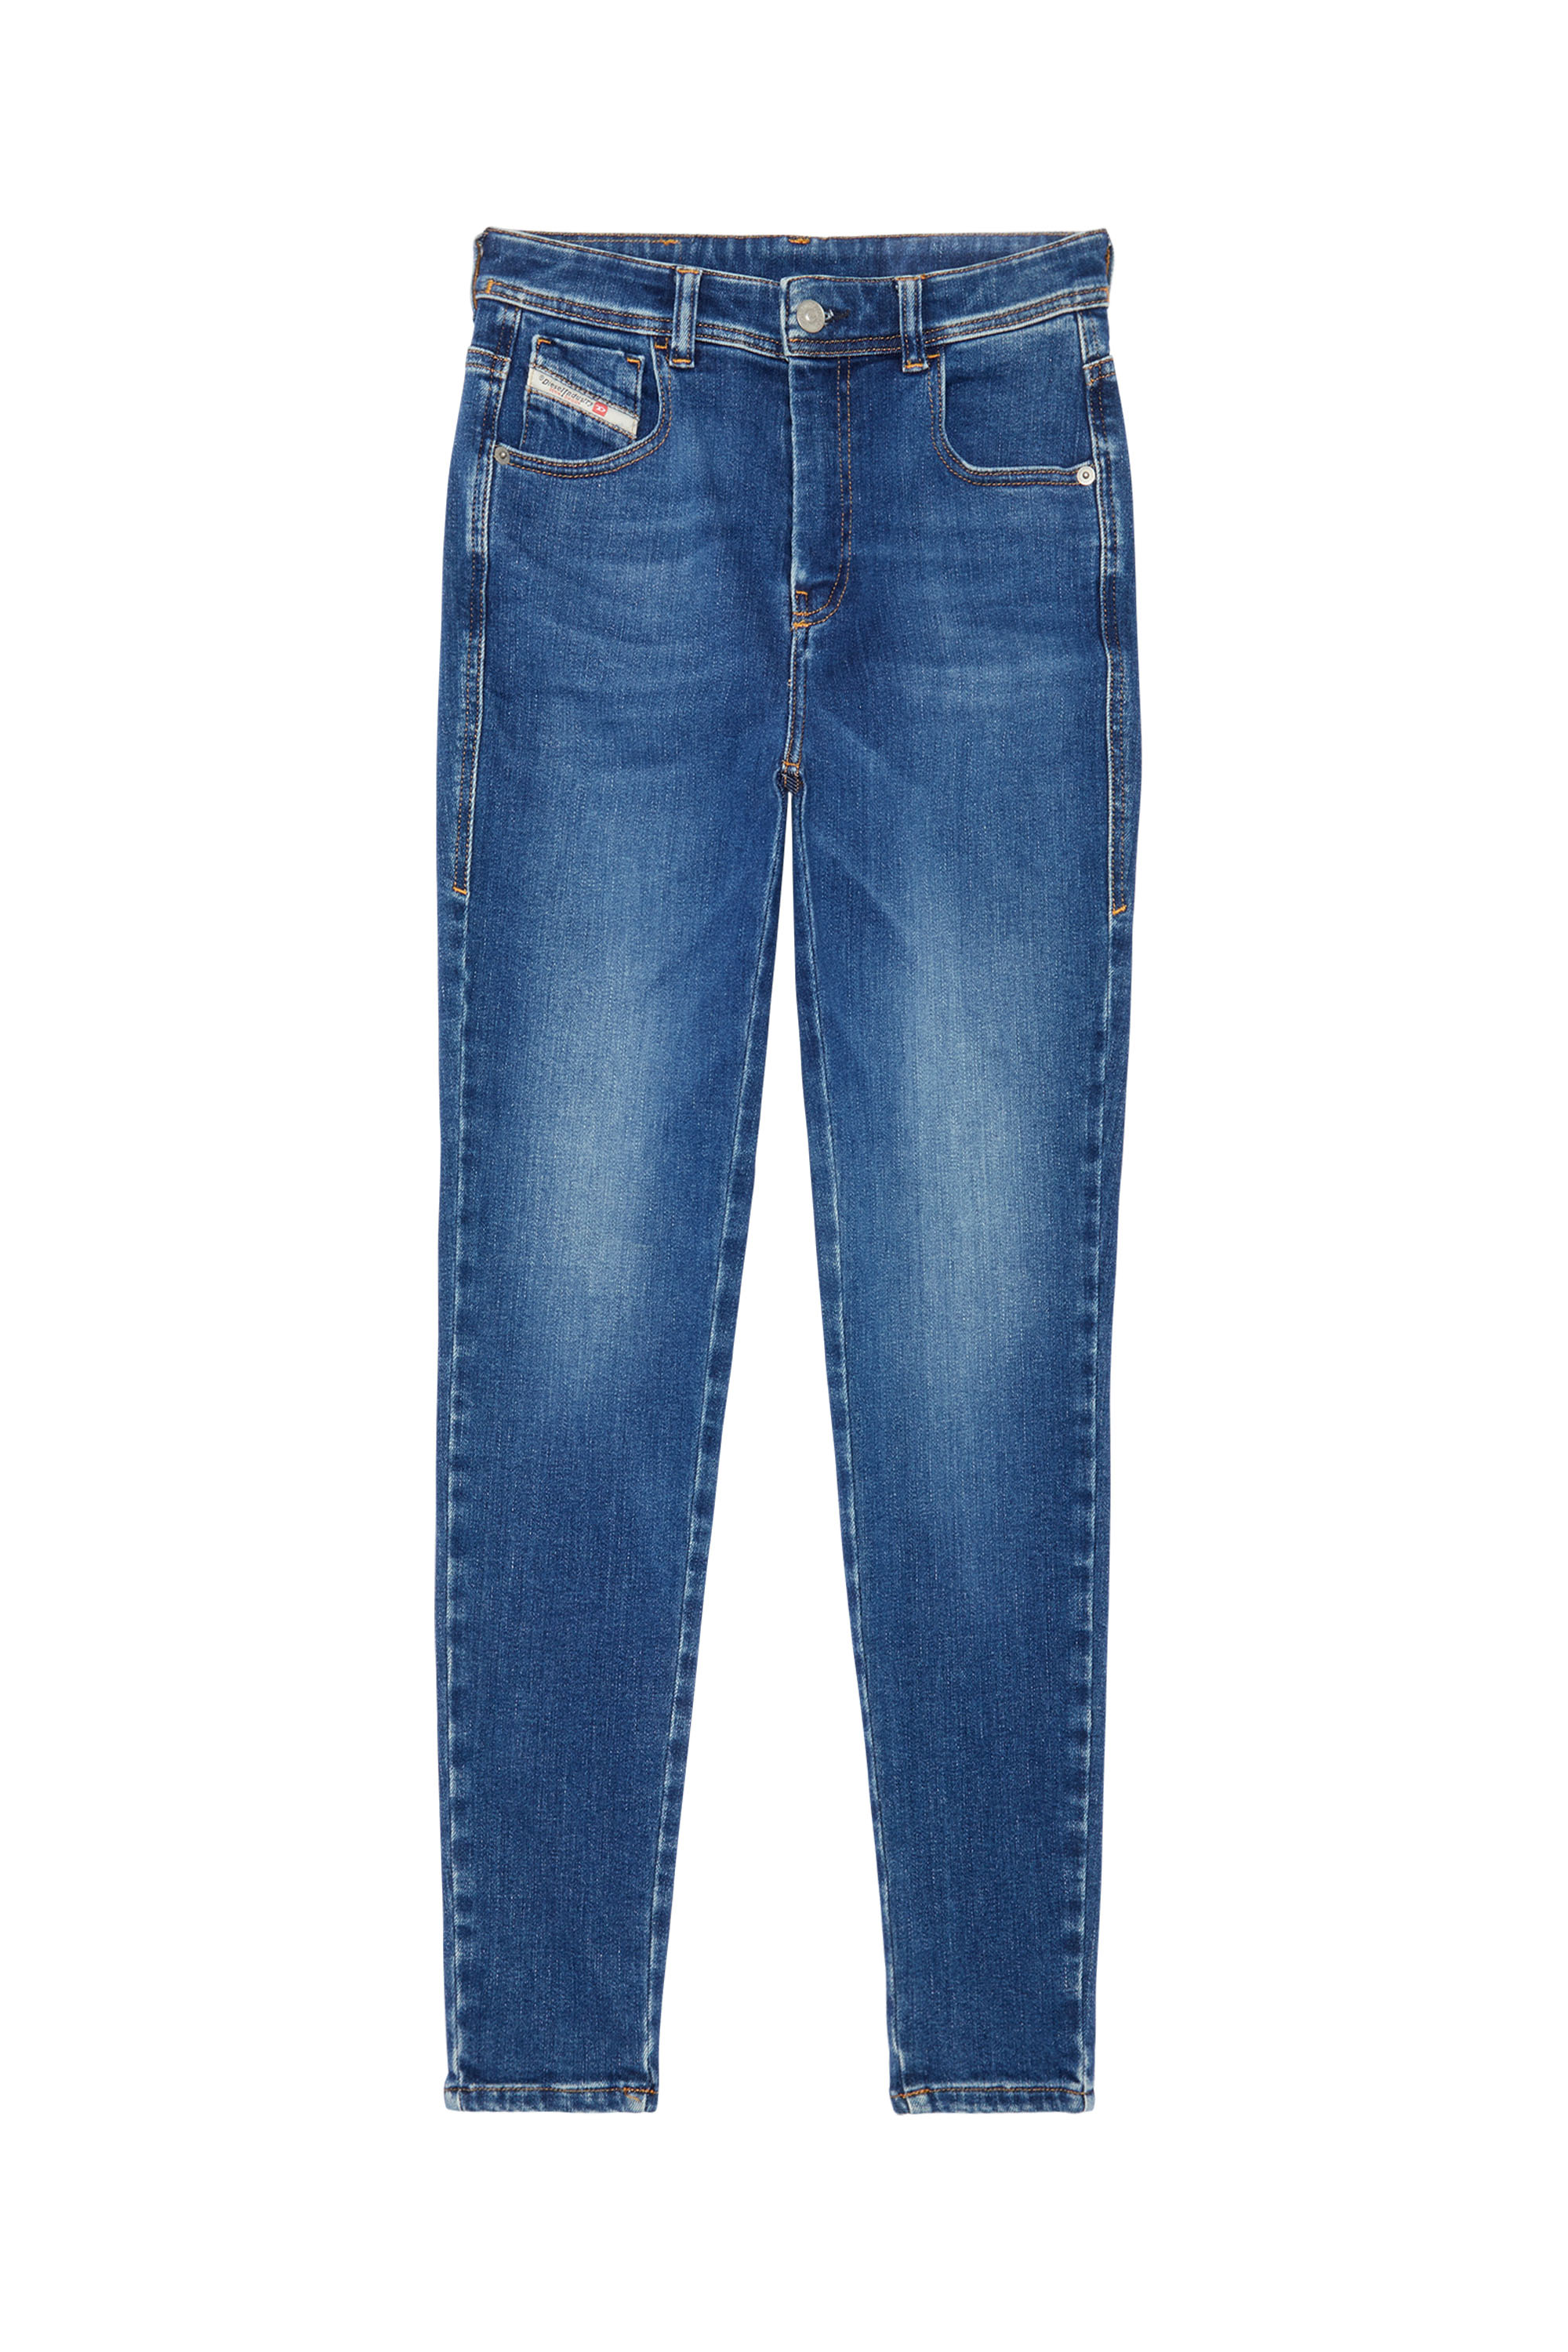 Super skinny Jeans 1984 Slandy-High 09C21, Medium blue - Jeans